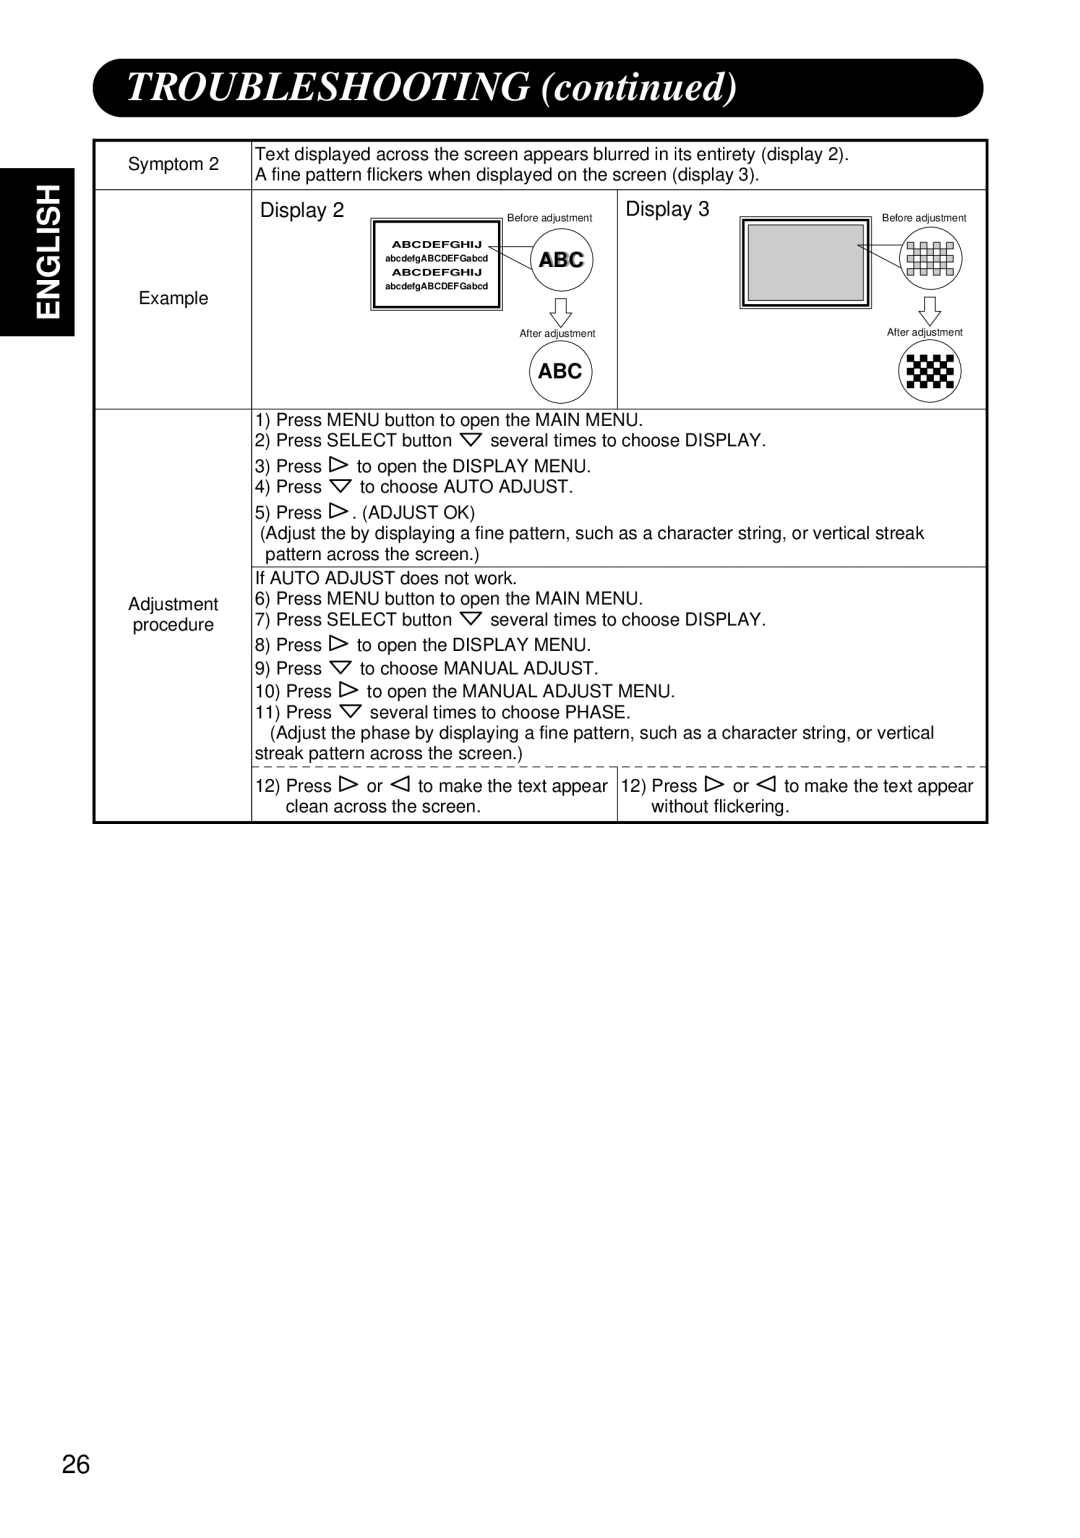 Hitachi Koki USA CMP4120HDUS user manual TROUBLESHOOTING continued, English 